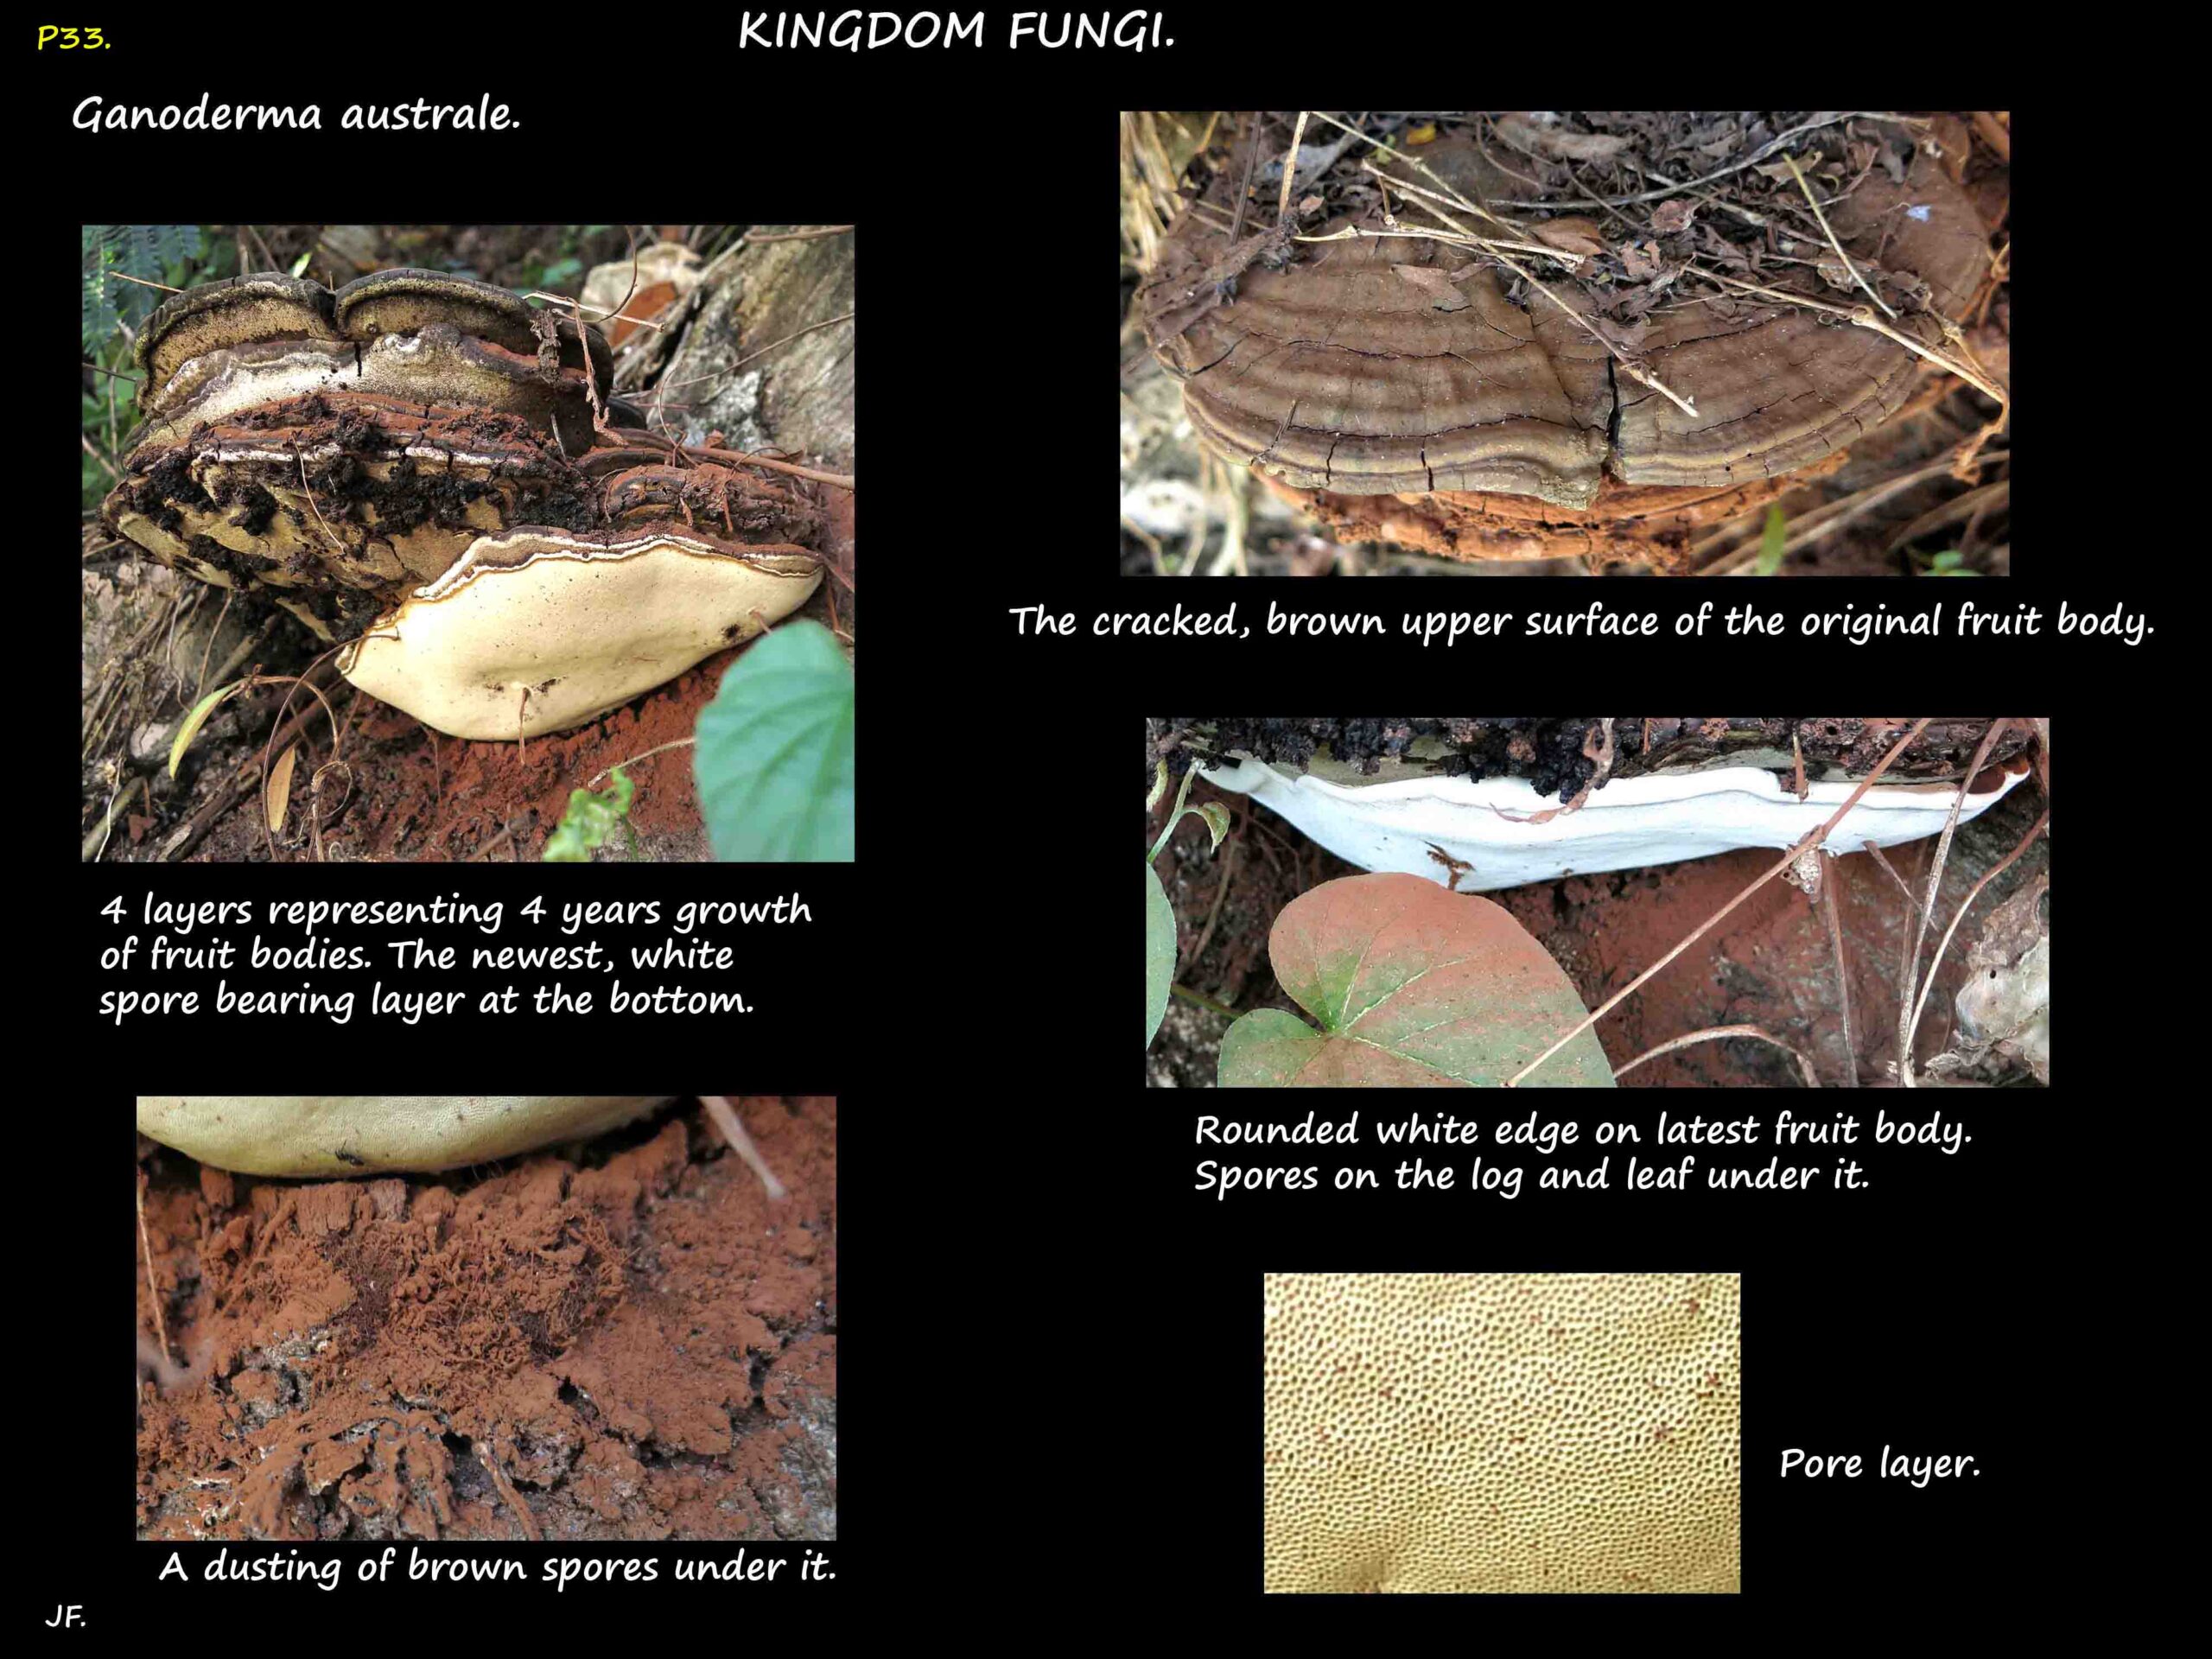 1 Four tiers of Ganoderma australe brackets & brown spores